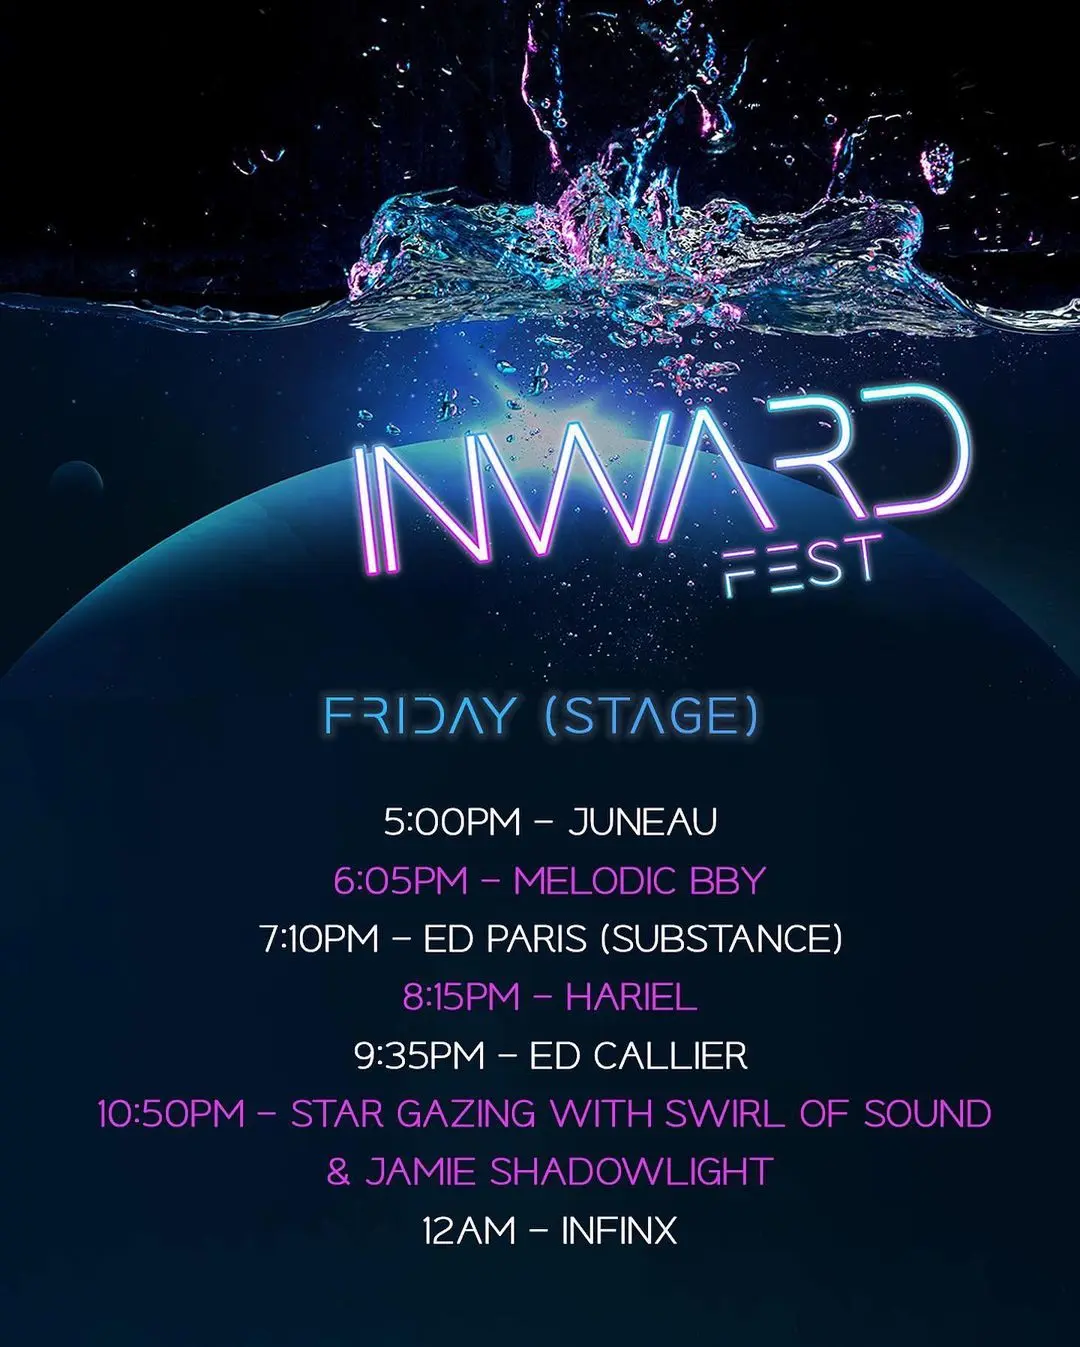 Inward Fest Friday Set Times